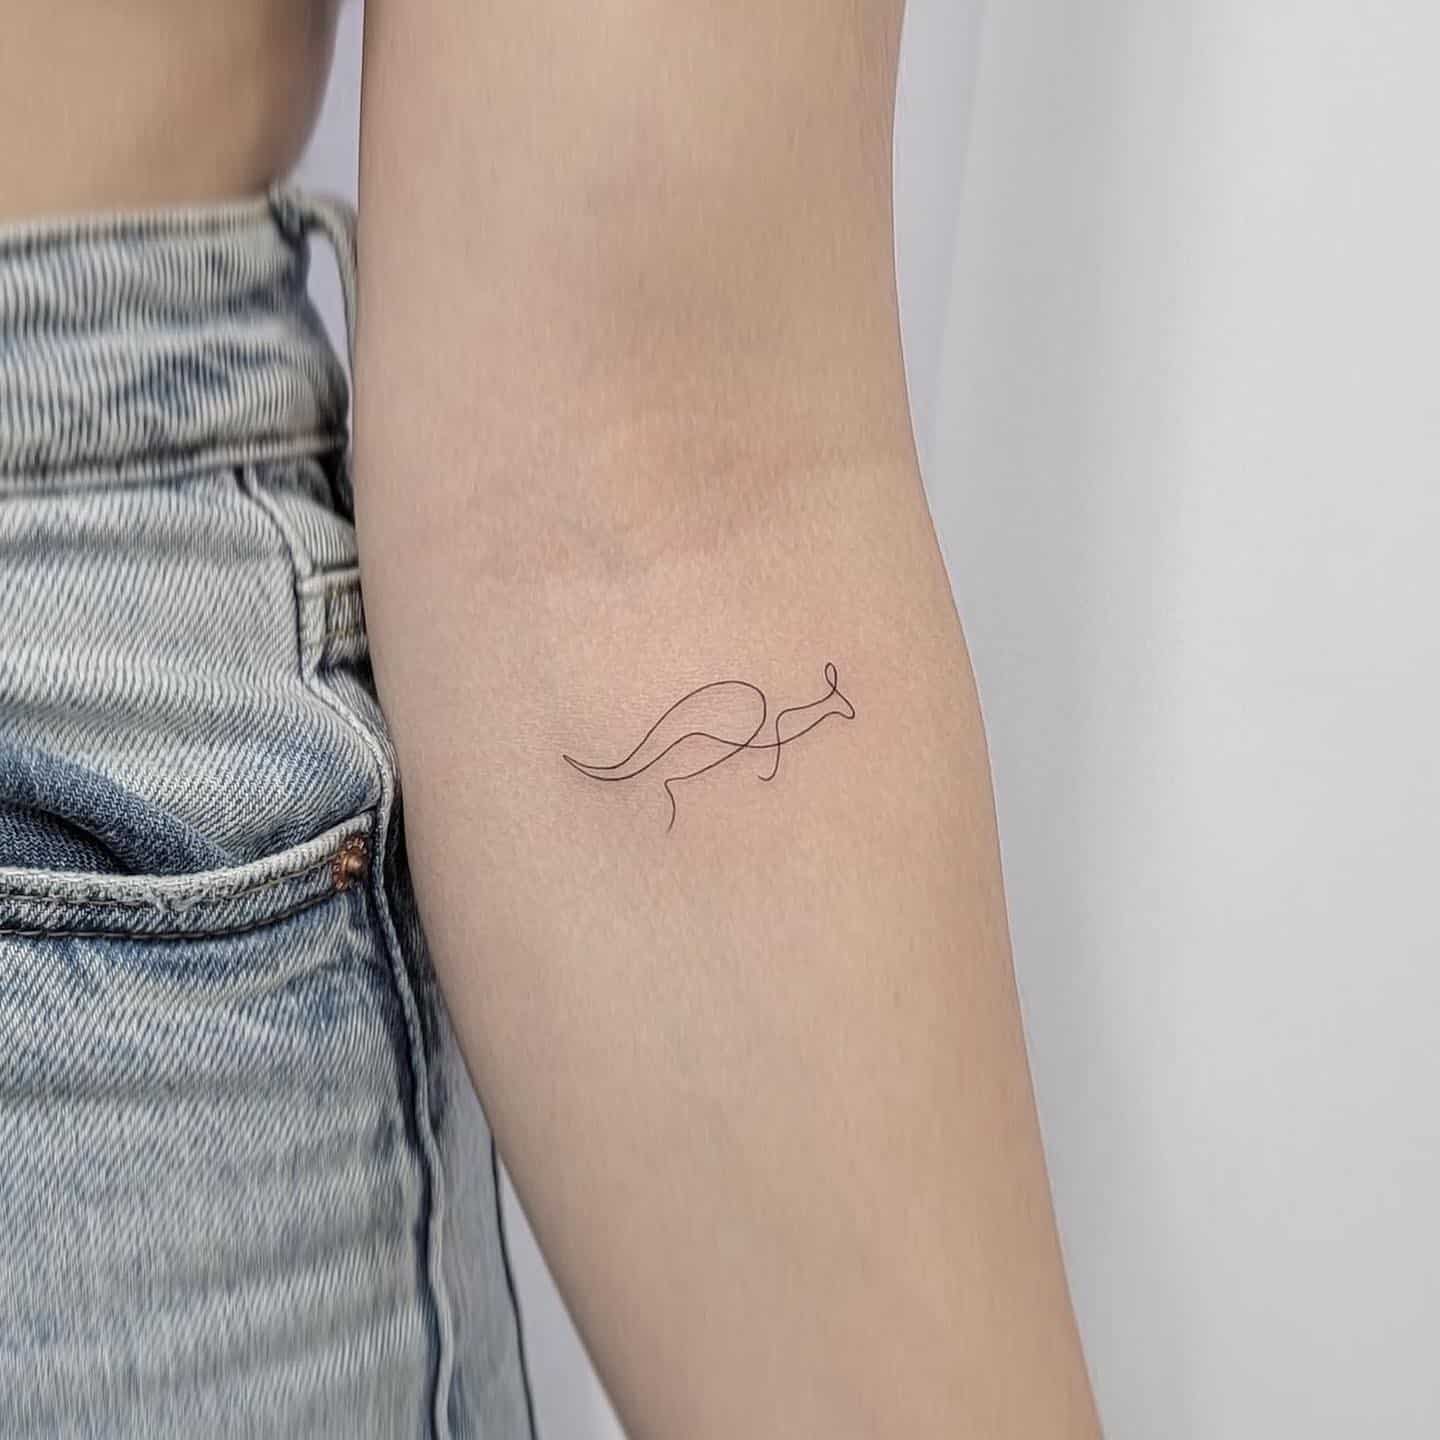 Kangaroo tattoo by tattooer owen